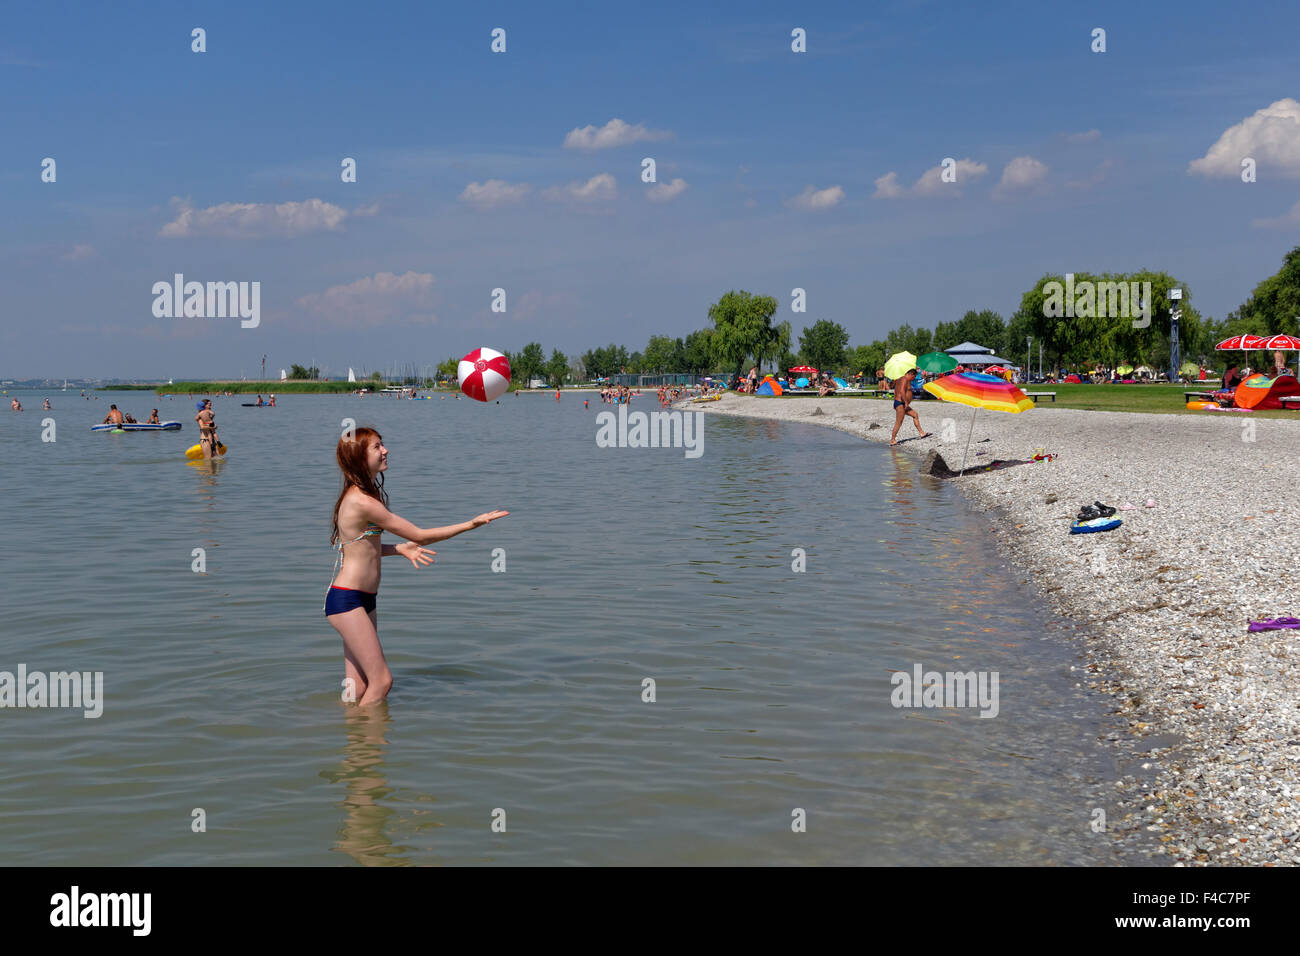 Bathers in water, bathing, Podersdorf, Lake Neusiedl, Burgenland, Austria Stock Photo